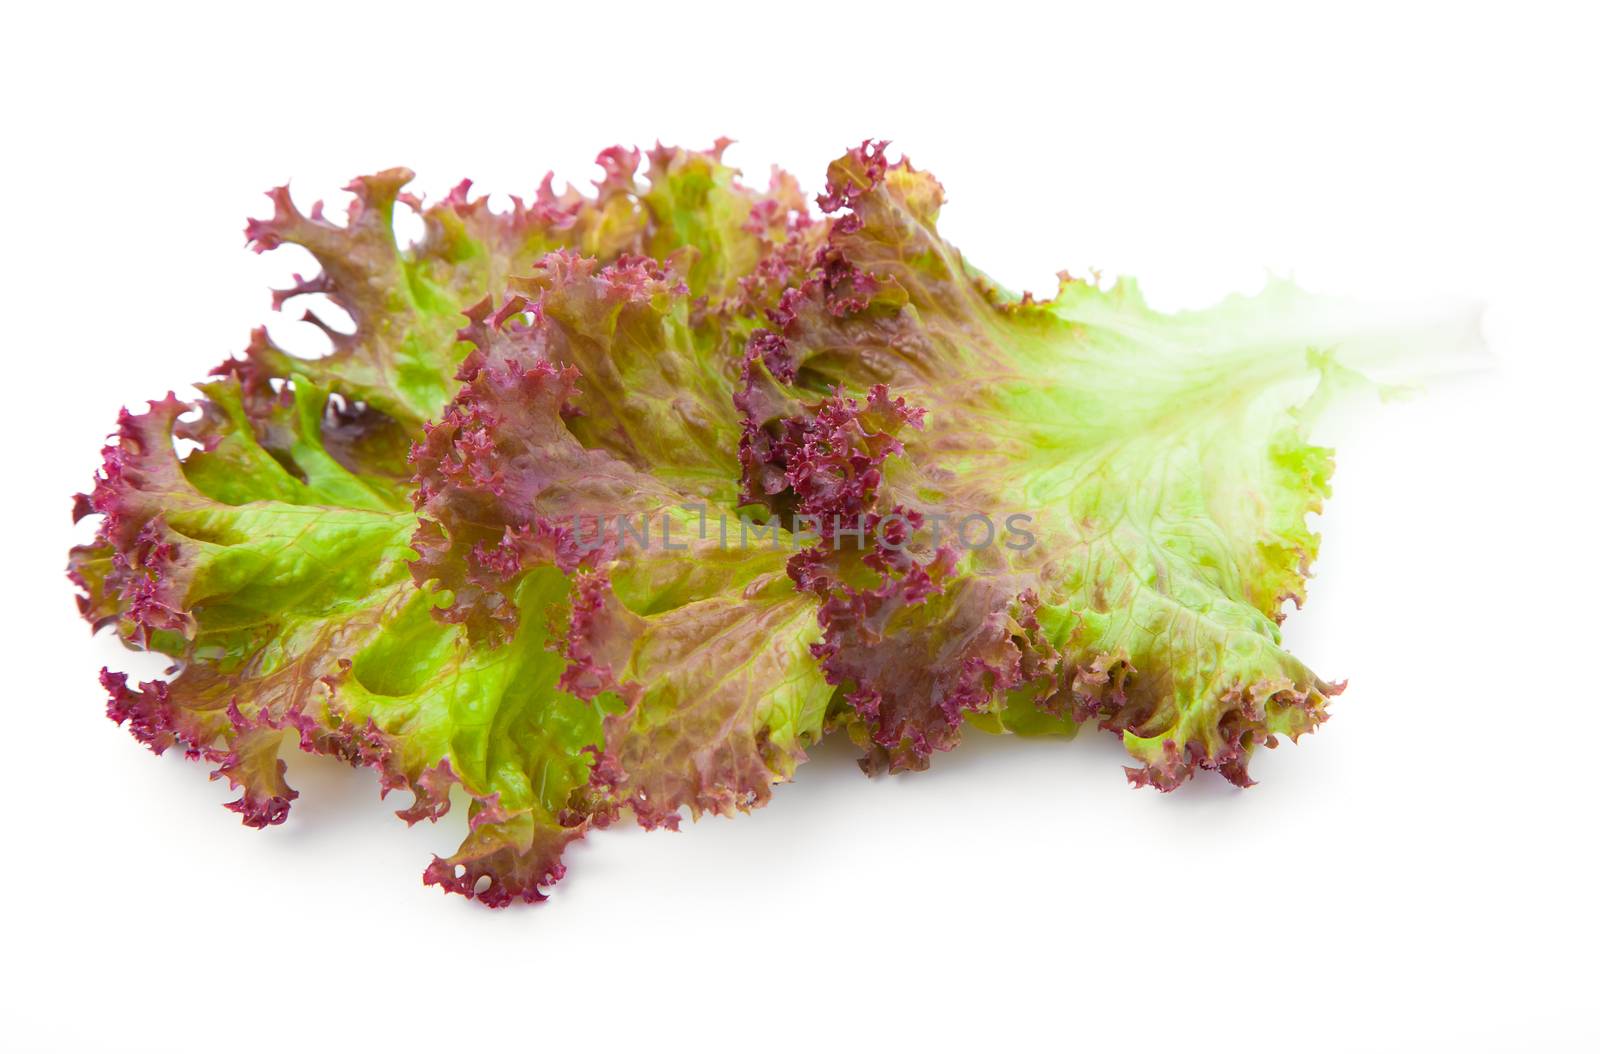 Lettuce. Salad leaves isolated on white background by motorolka